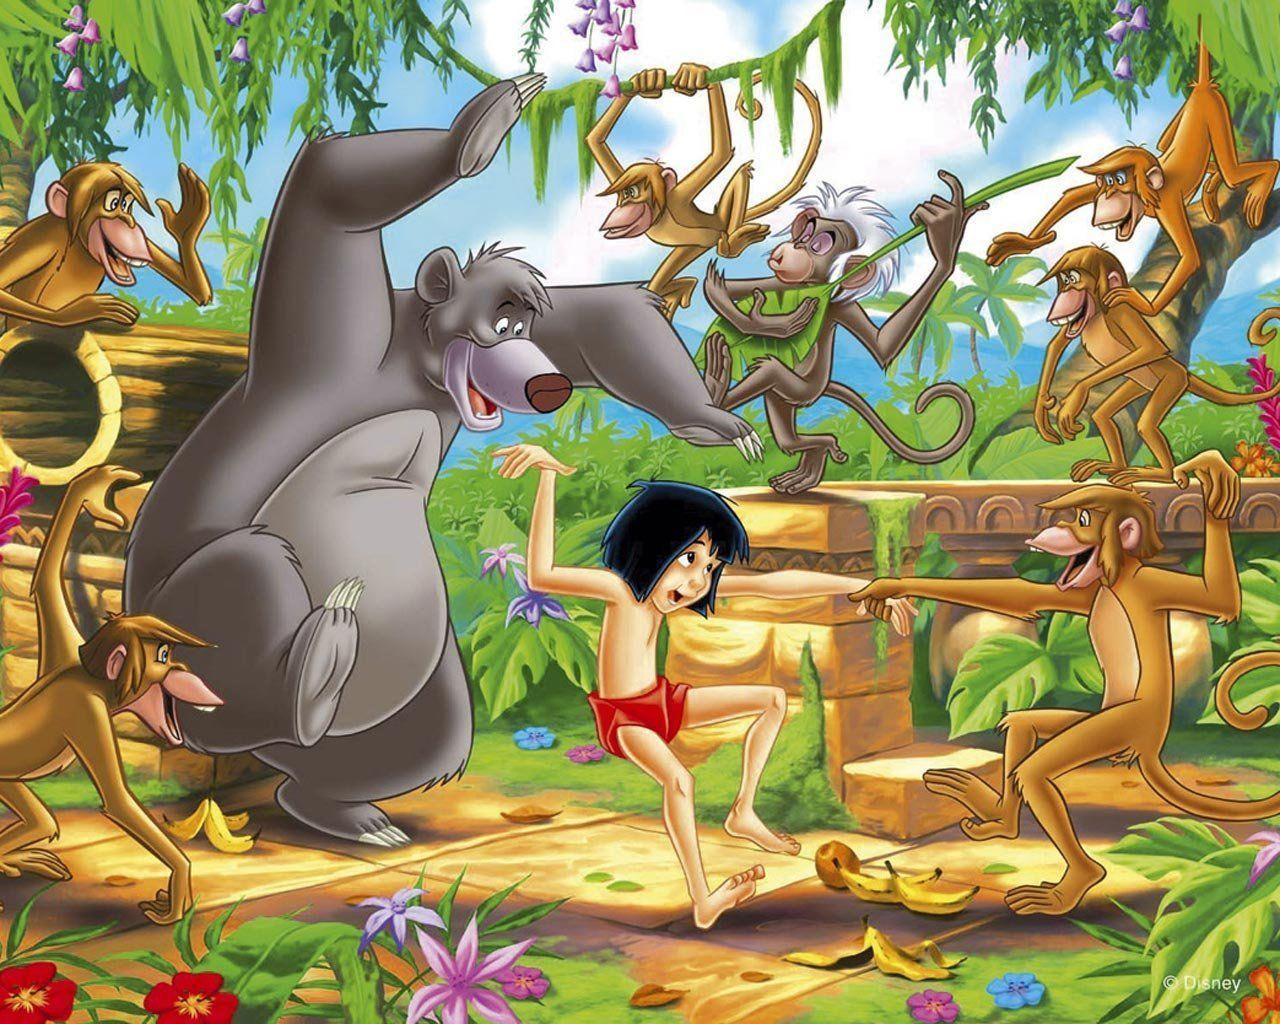 The Jungle Book. Jungle book, Jungle book disney, Disney animated movies